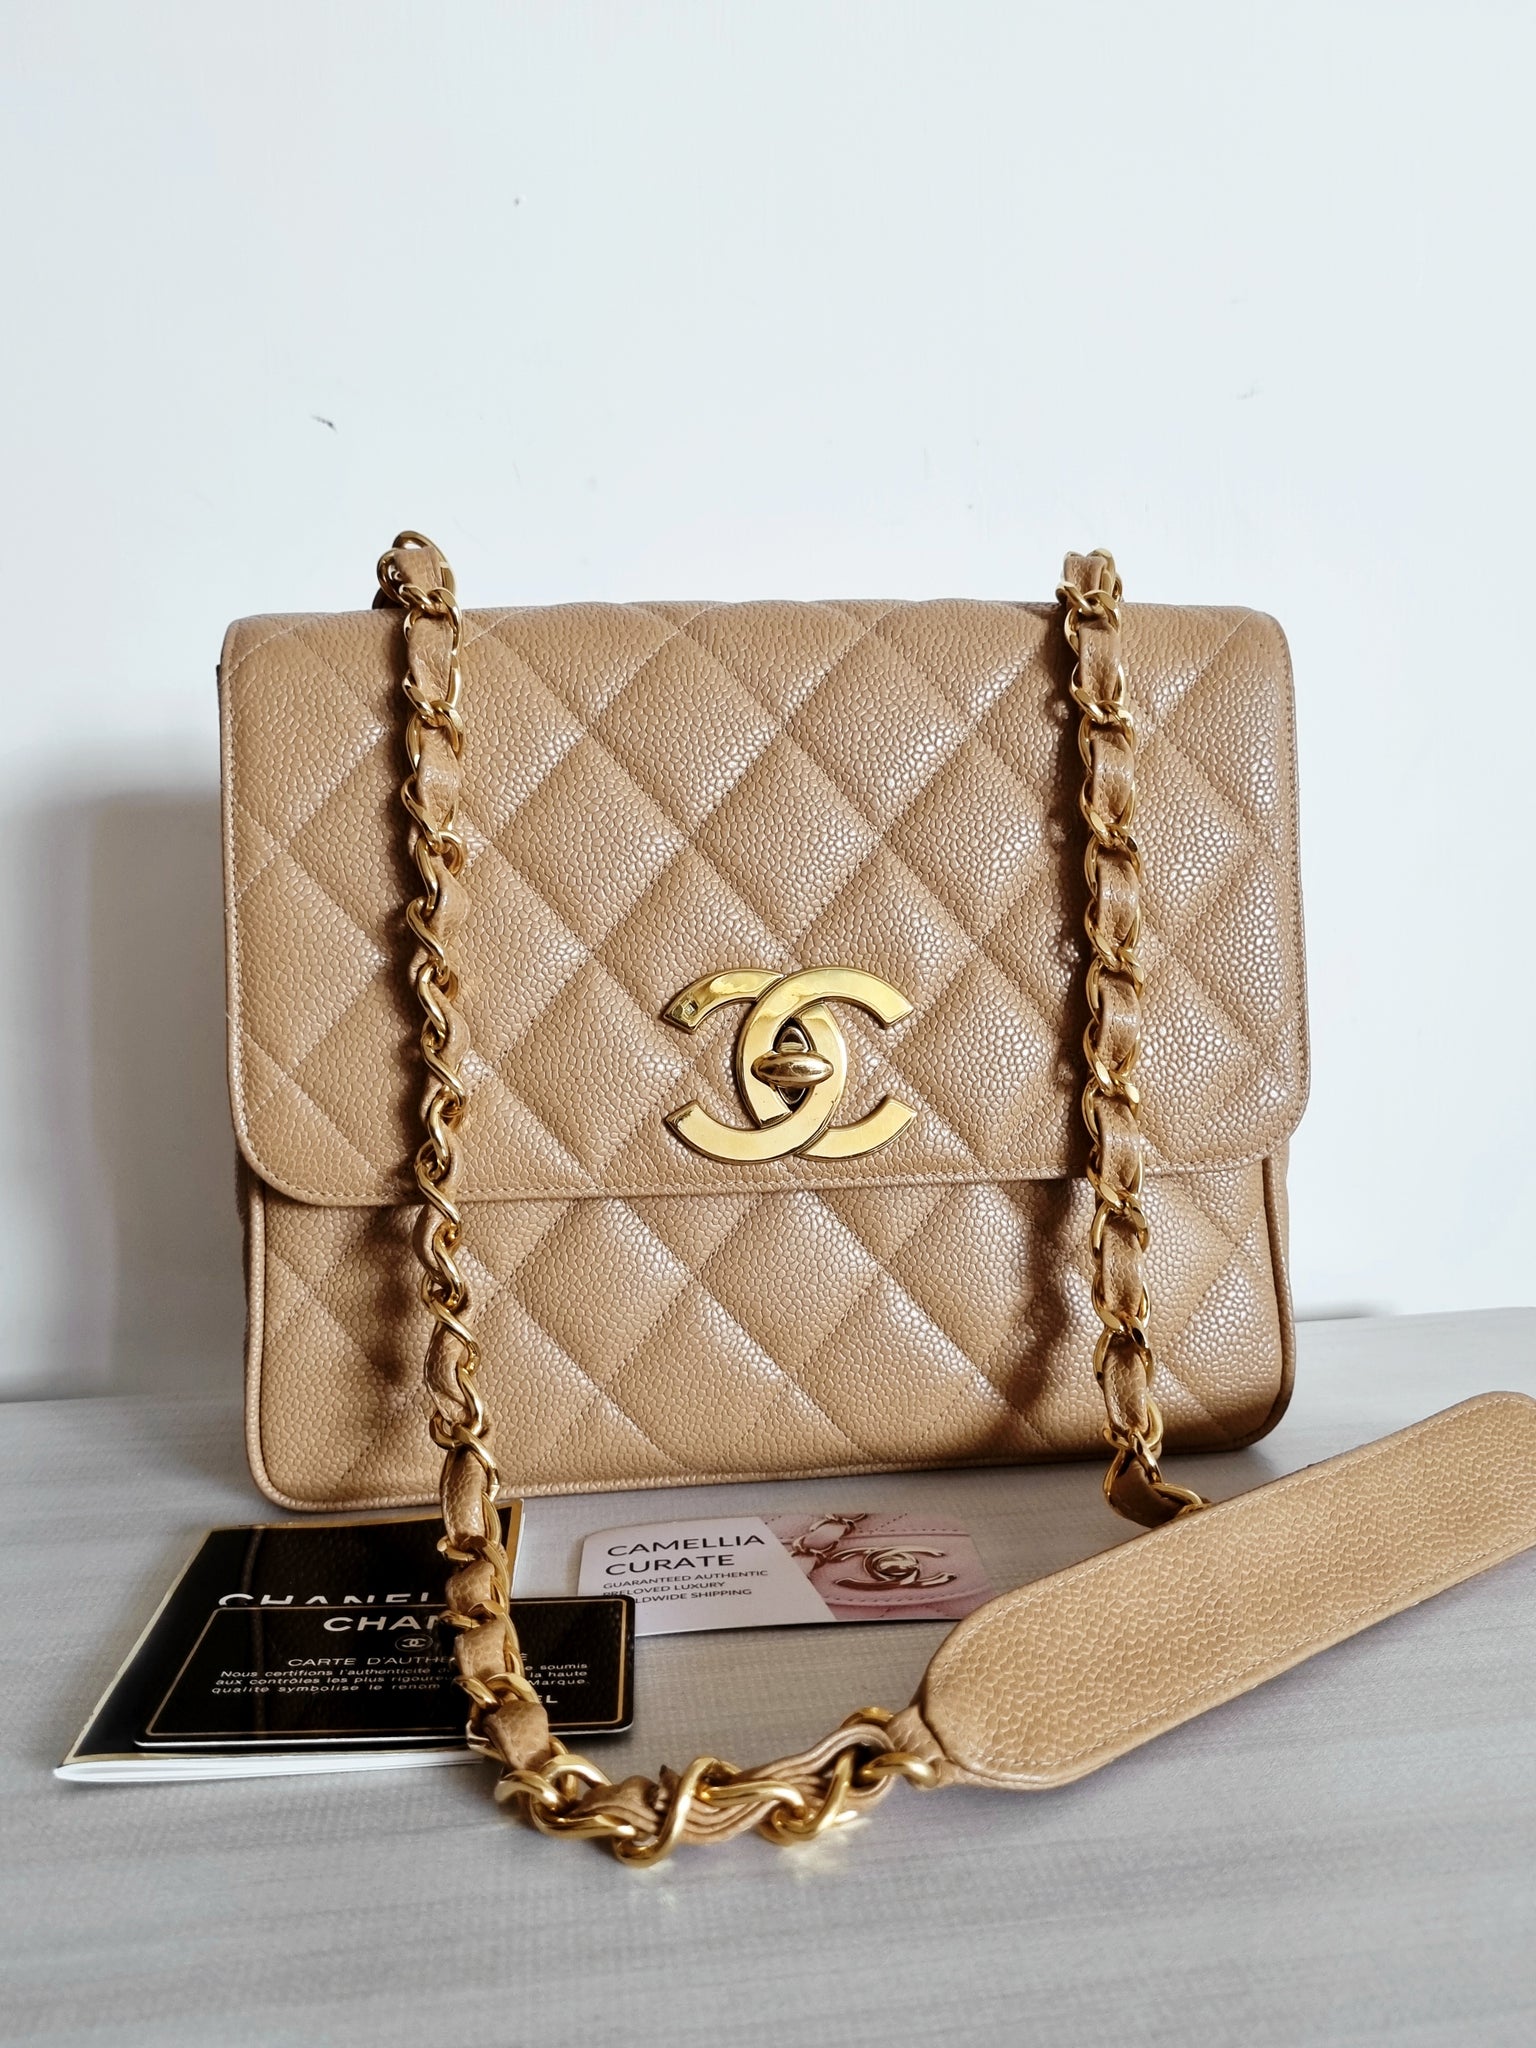 Caramel Chanel classic flap medium in 24k gold hardware